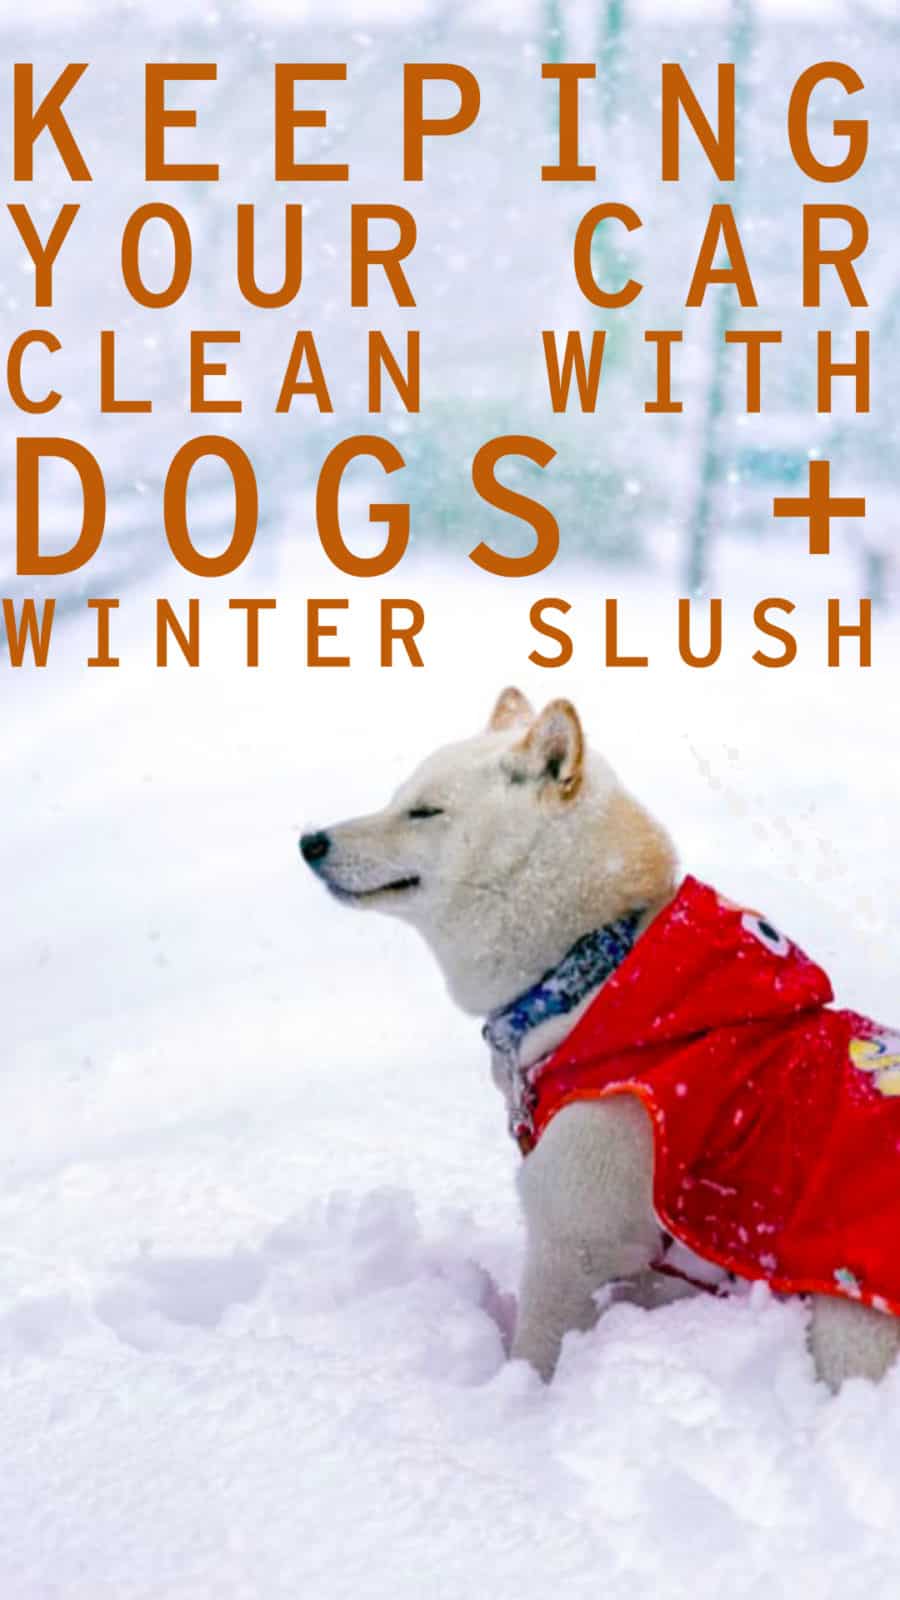 dogs and winter slush